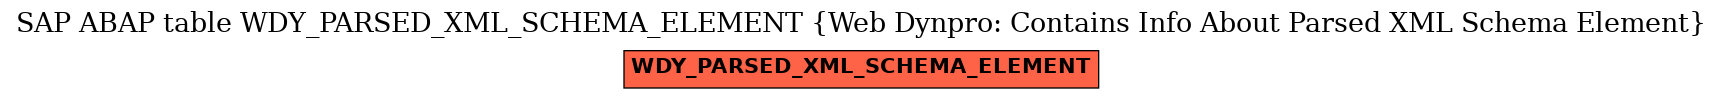 E-R Diagram for table WDY_PARSED_XML_SCHEMA_ELEMENT (Web Dynpro: Contains Info About Parsed XML Schema Element)